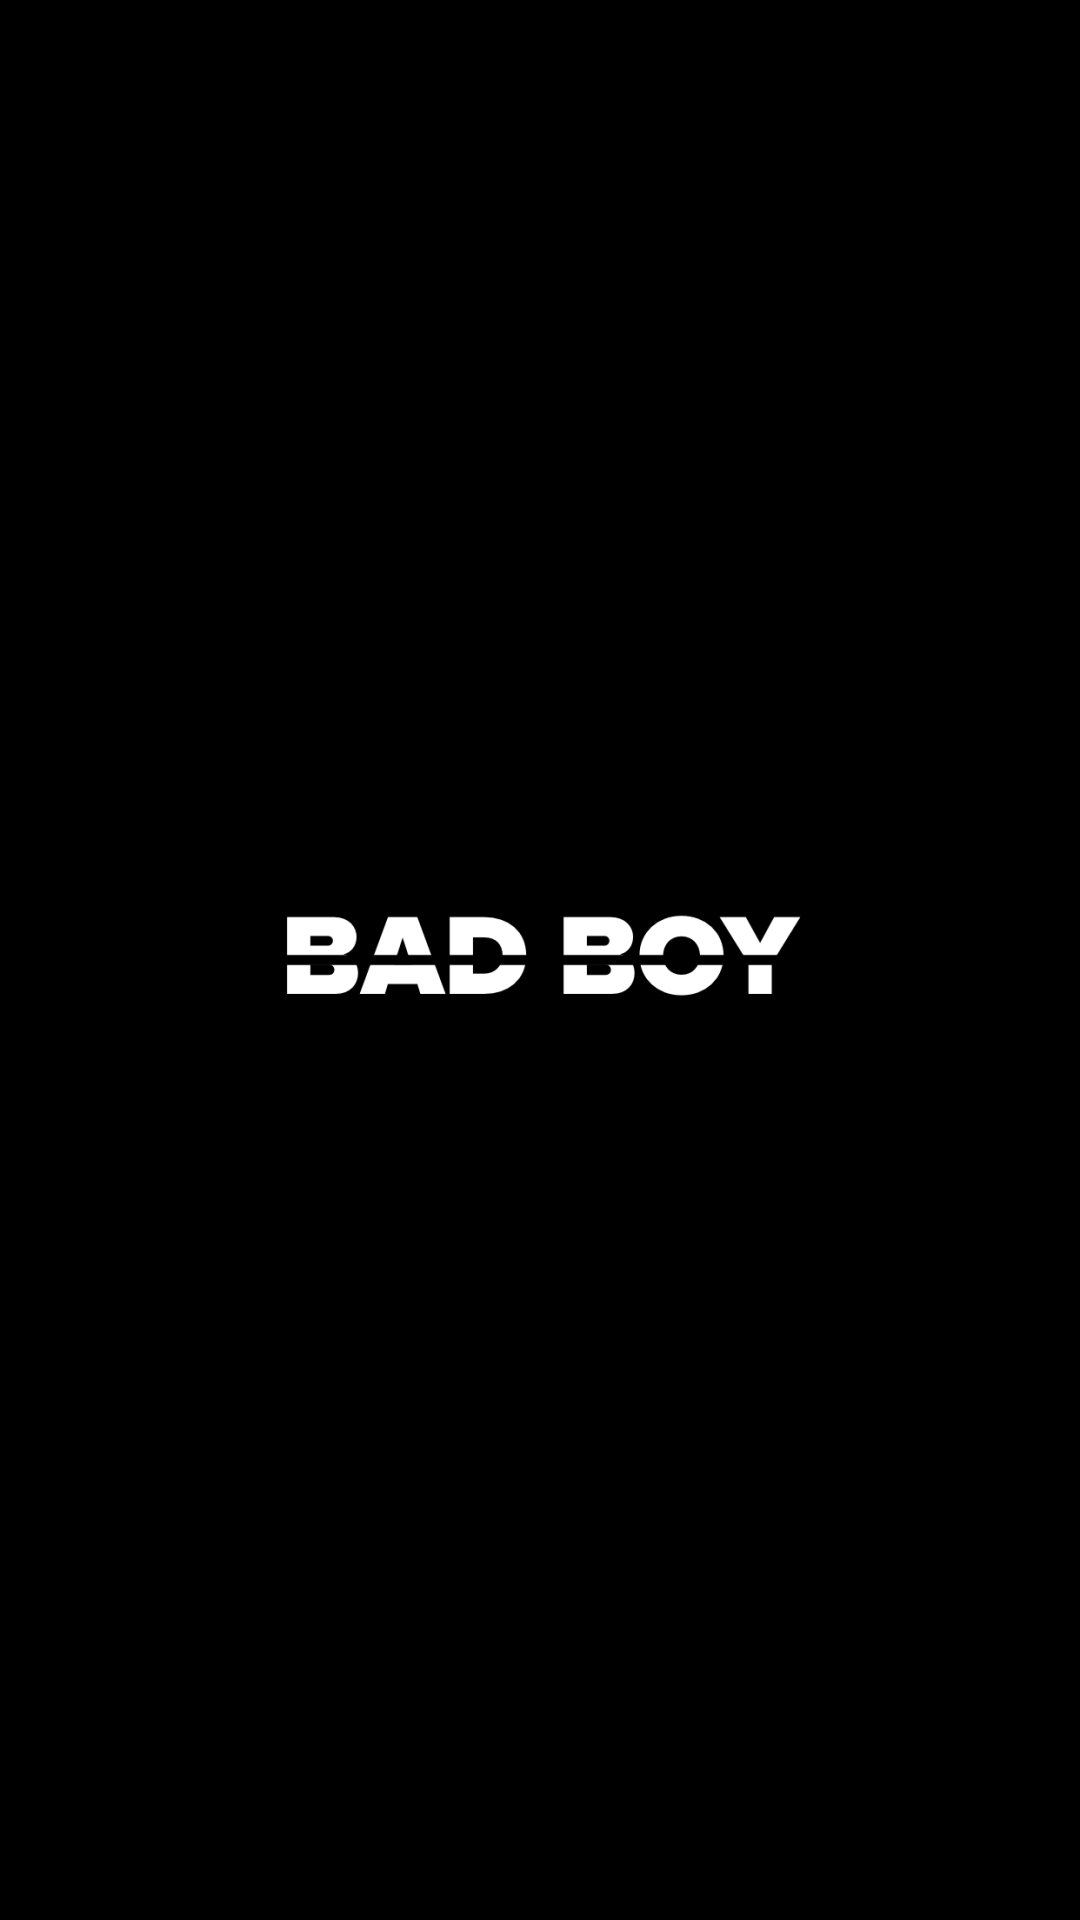 Bad boy.” Bad Boy - #REDVELVET. Bad boys tumblr, Boys wallpaper, HD cool wallpaper